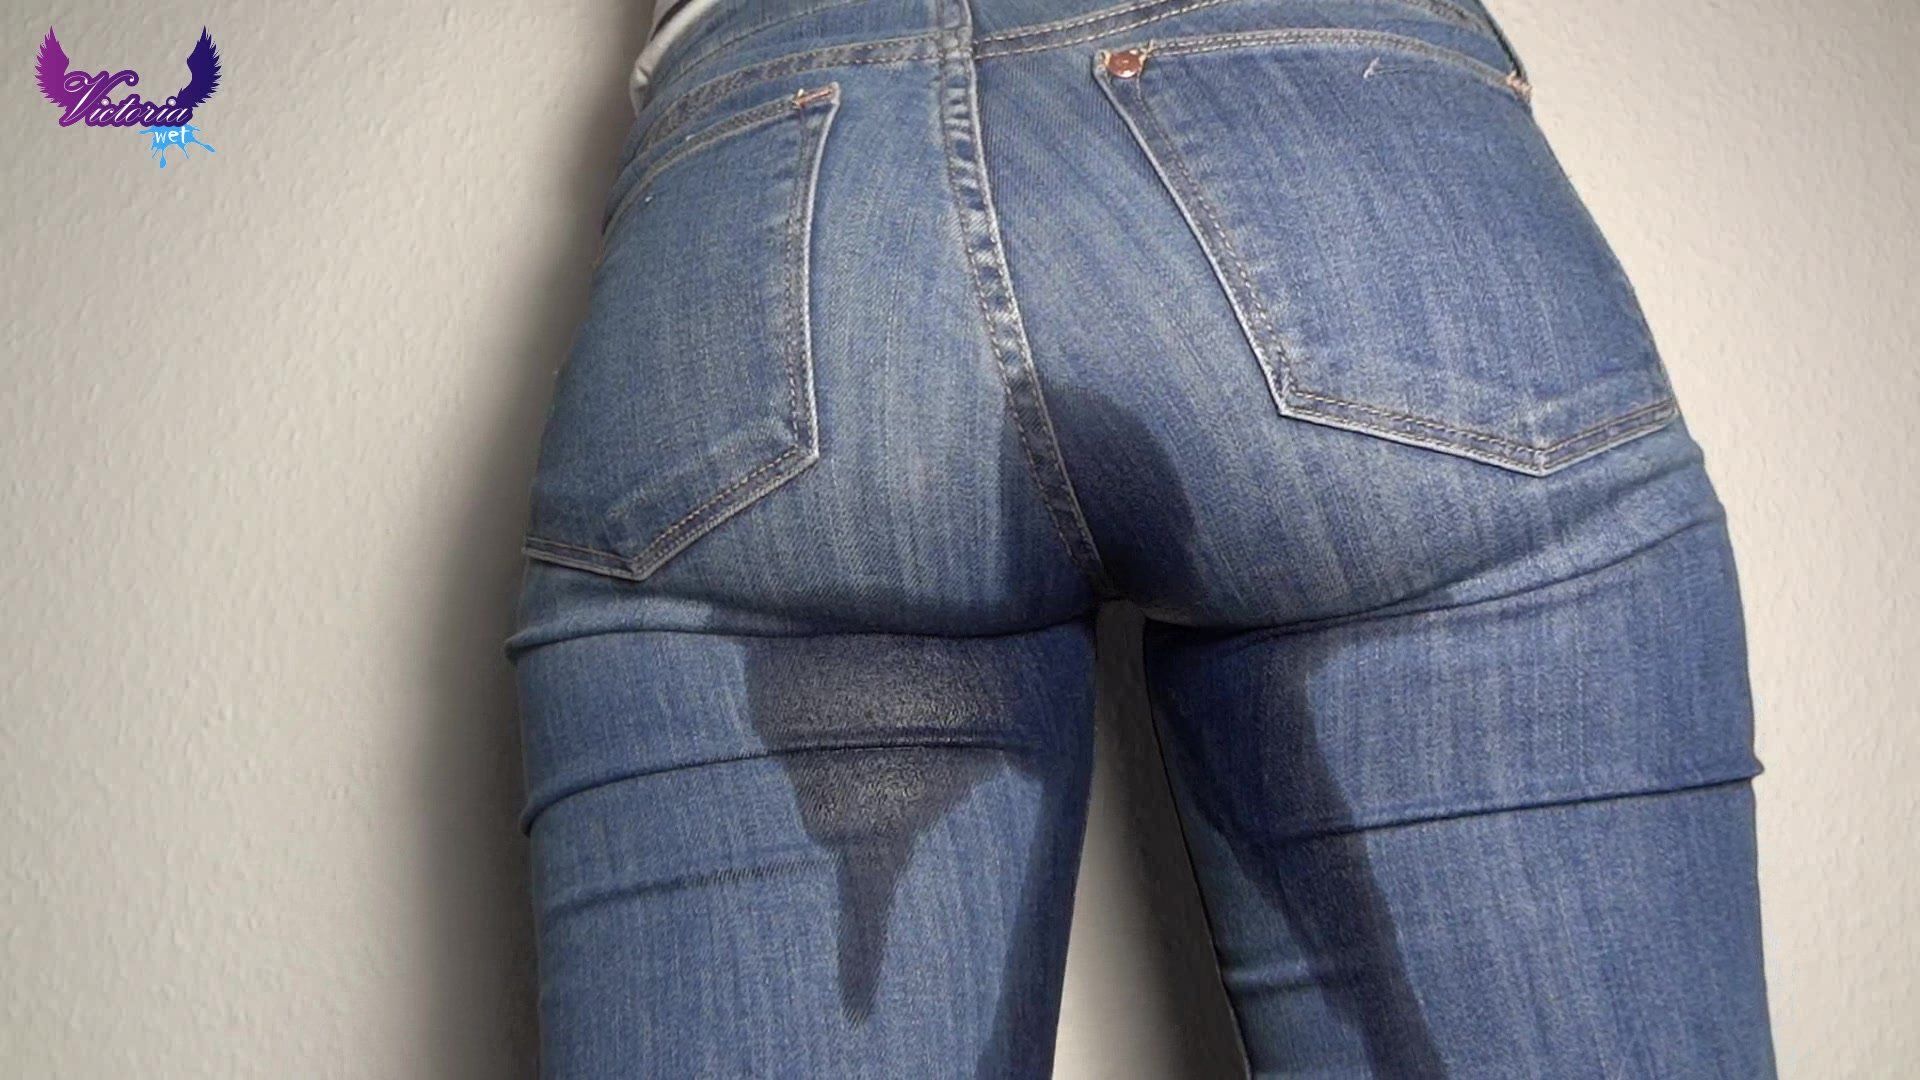 Female jeans wetting pics